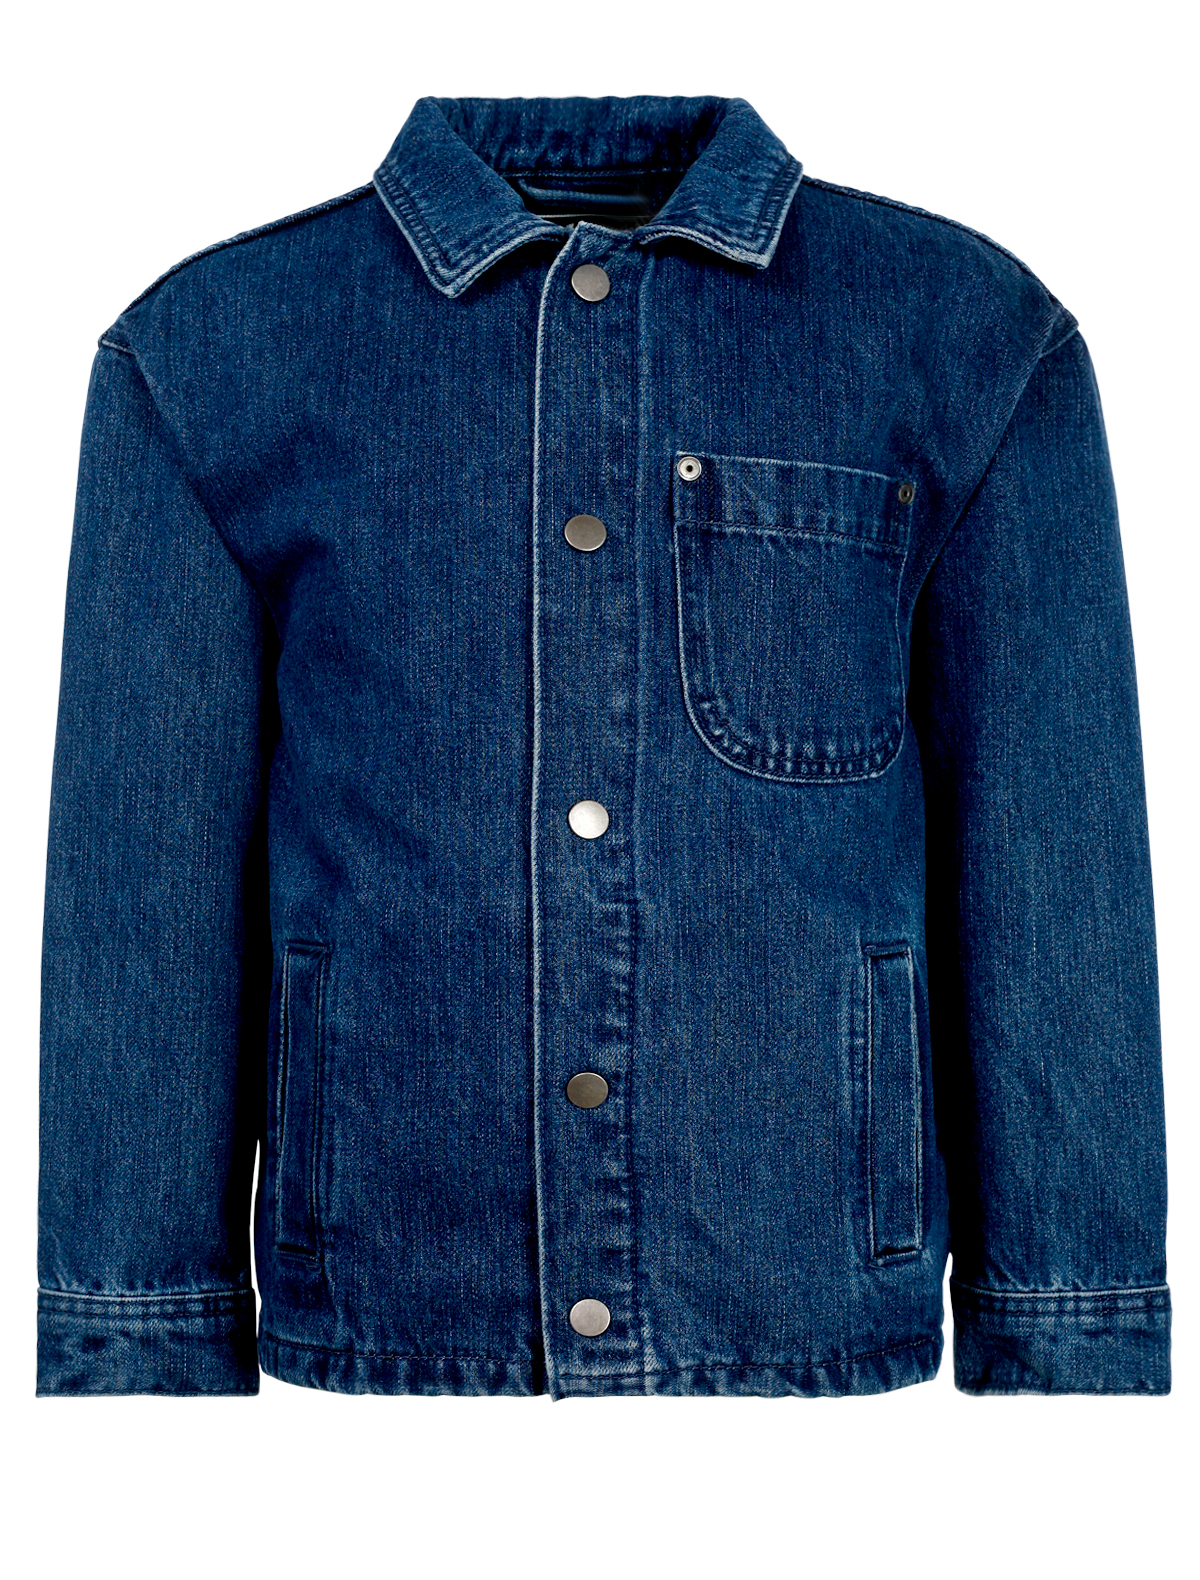 Куртка SILVER SPOON 2549270, цвет синий, размер 7 1074519372476 - фото 1